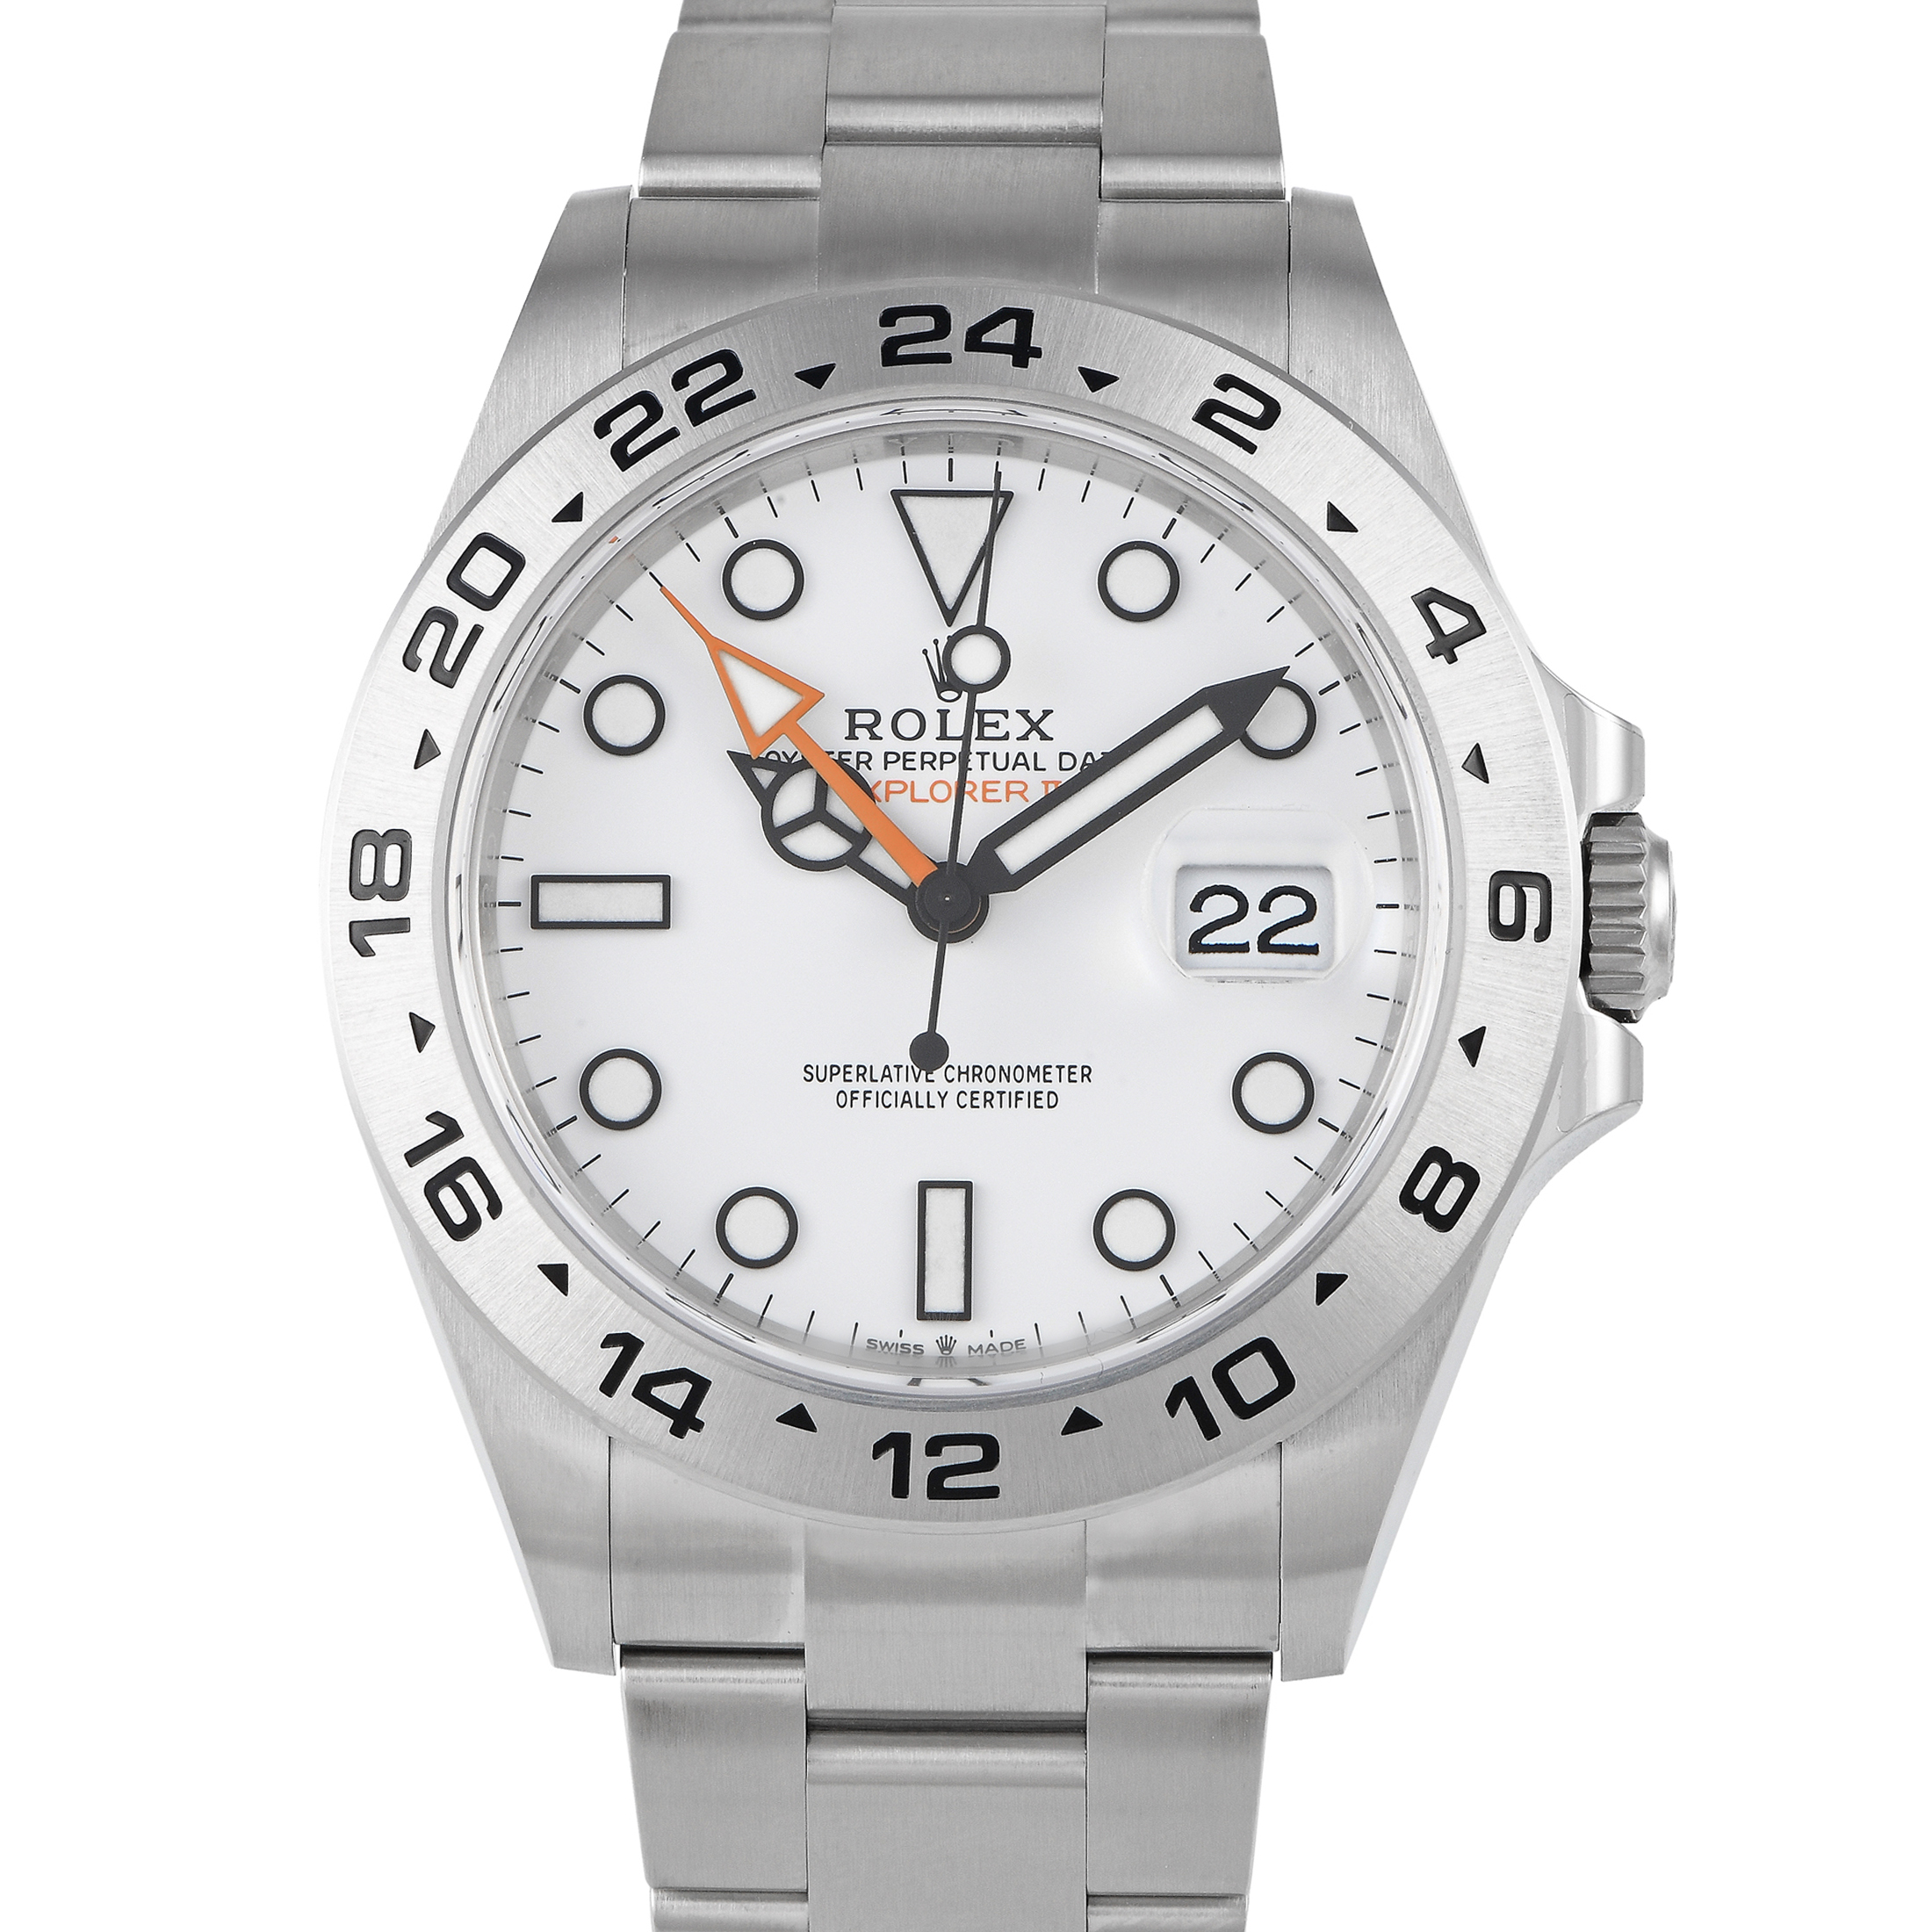 Rolex Explorer II White Dial Watch 226570